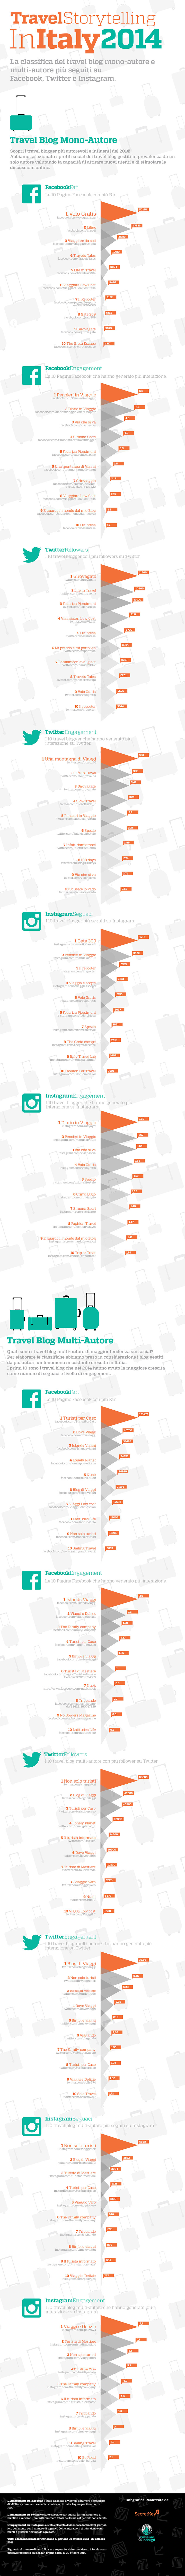 Classifica Travel Blog 2014